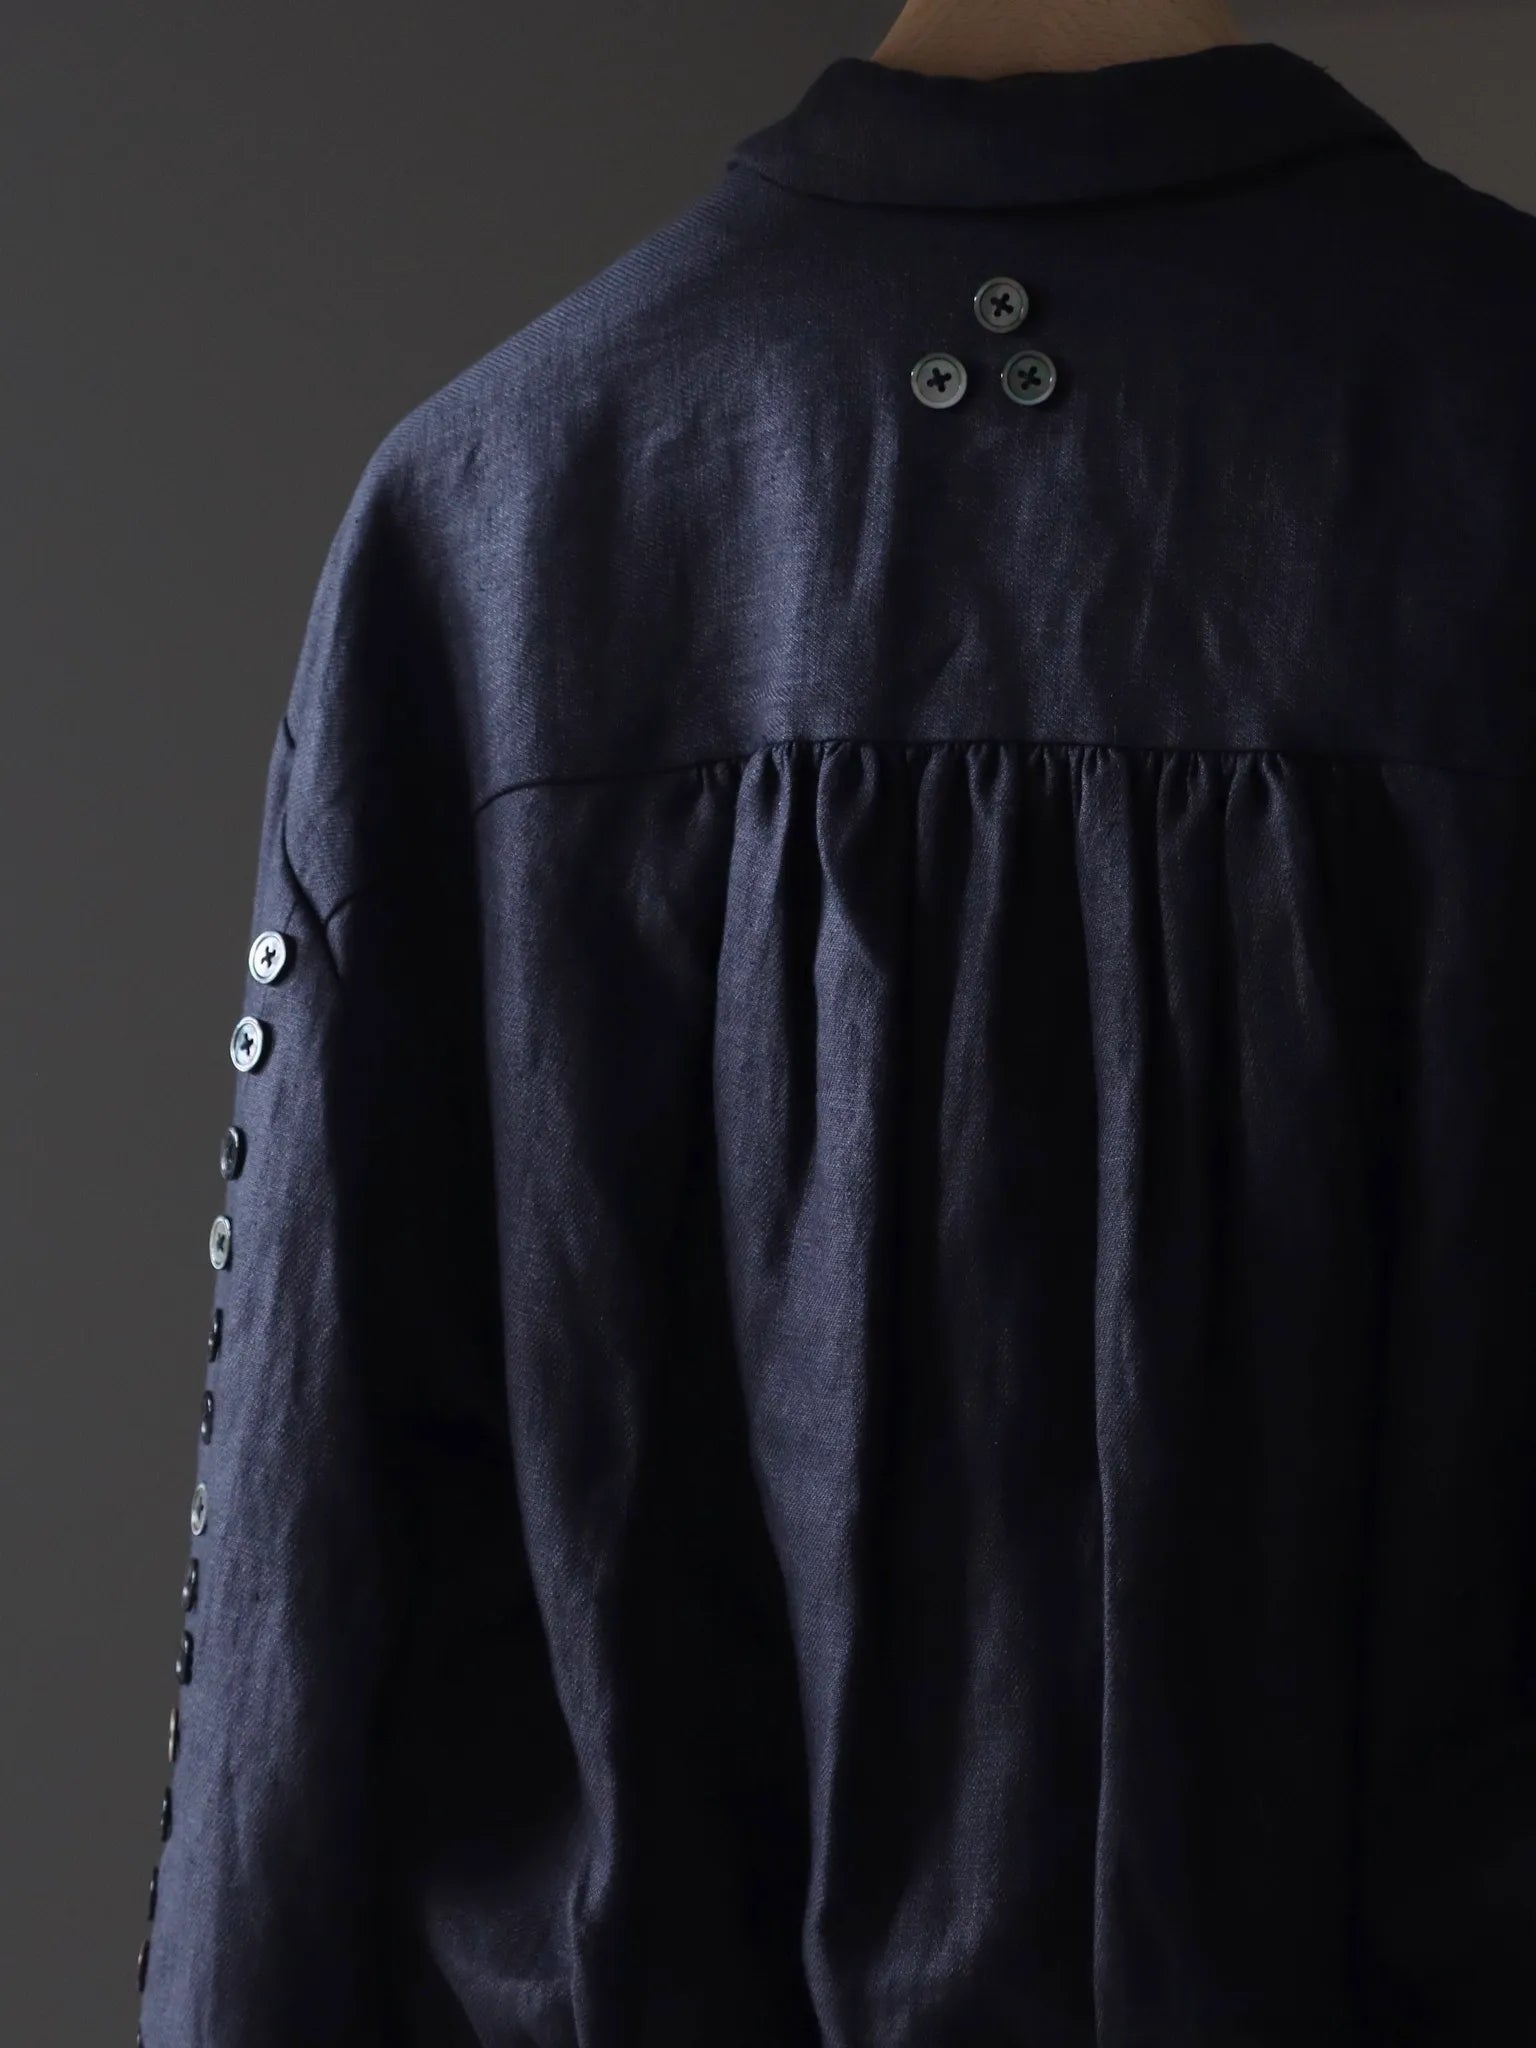 midorikawa-button-linen-jump-suits-charcoal-gray-6